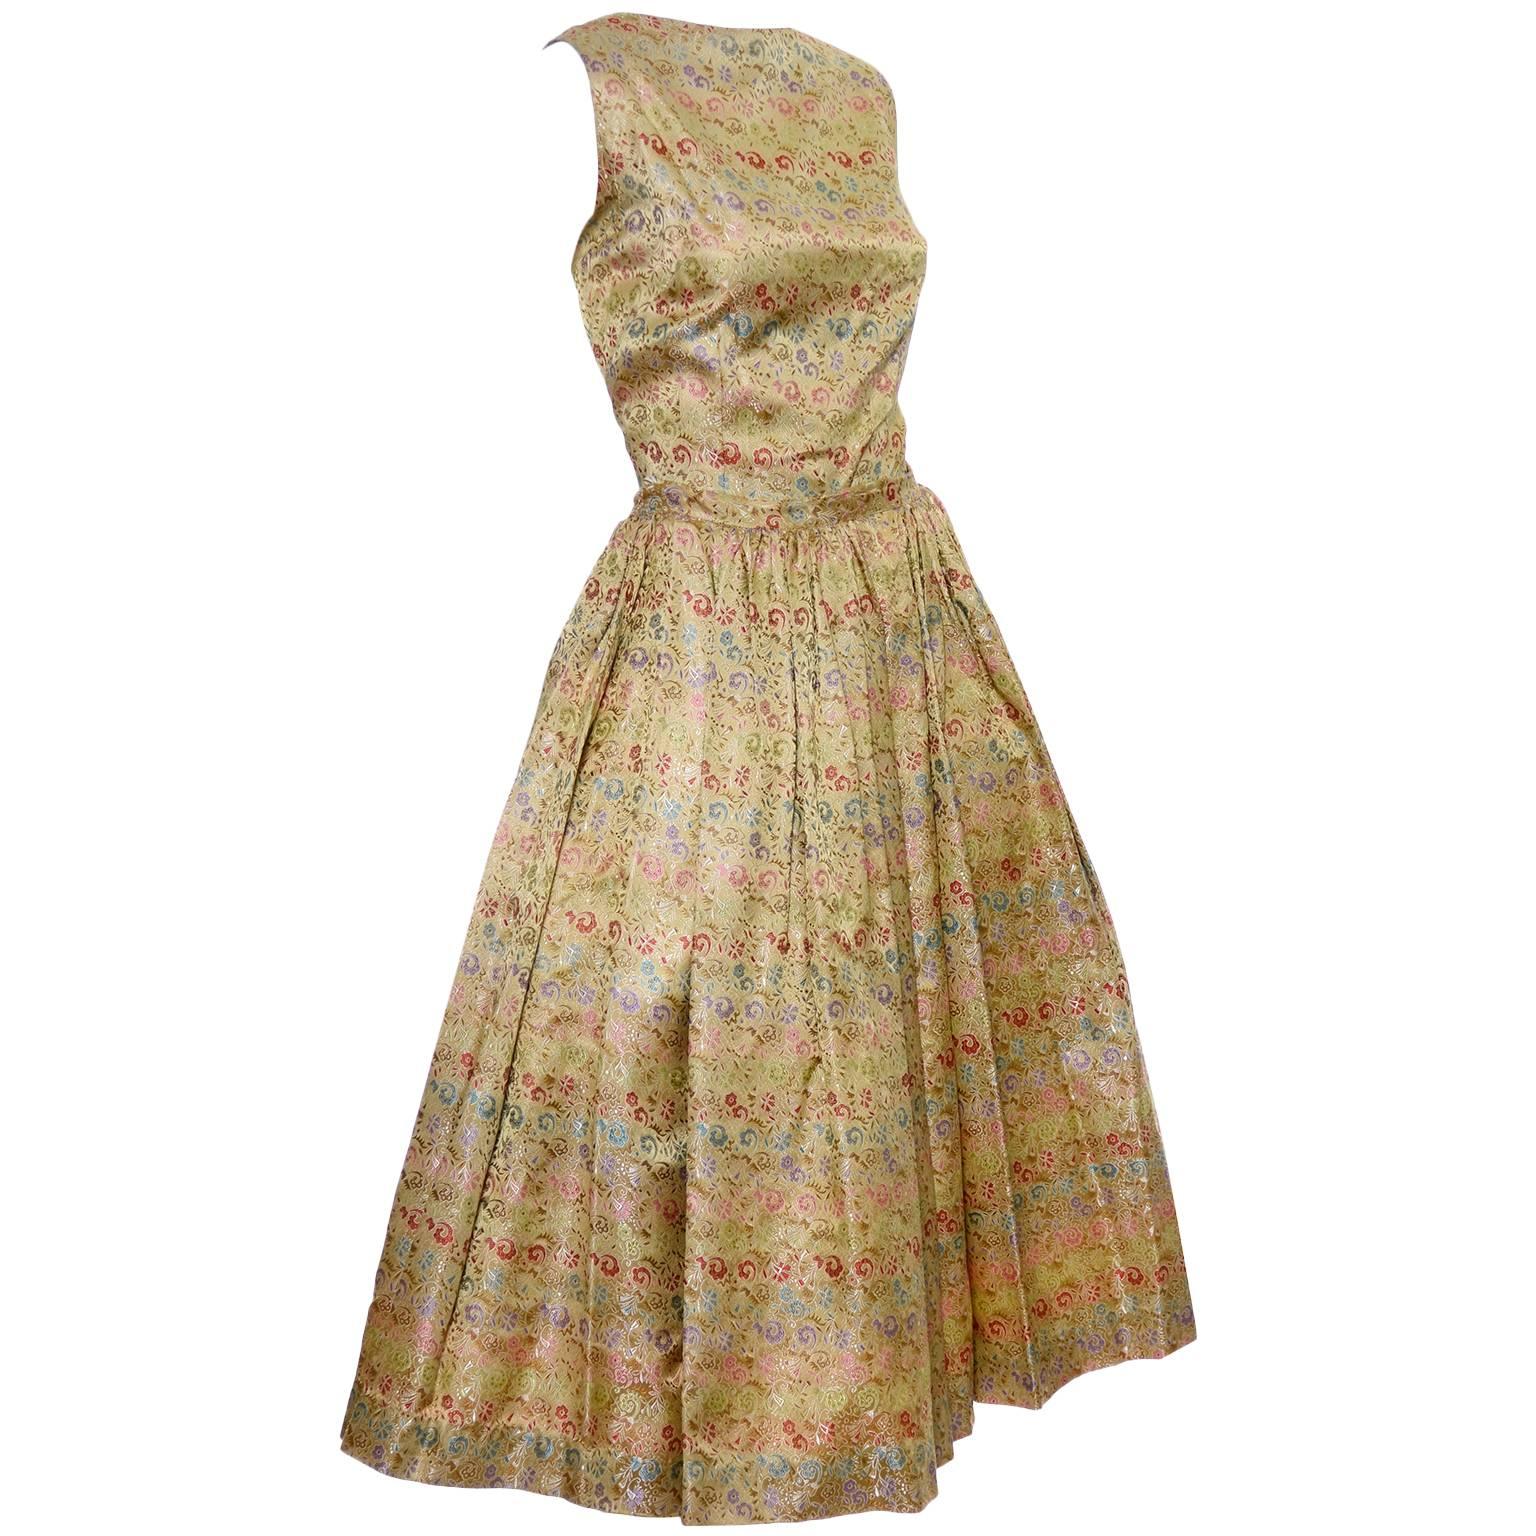 1950s 2 pc Vintage Dress Nelly de Grab New York Gold Brocade Floral Skirt Top